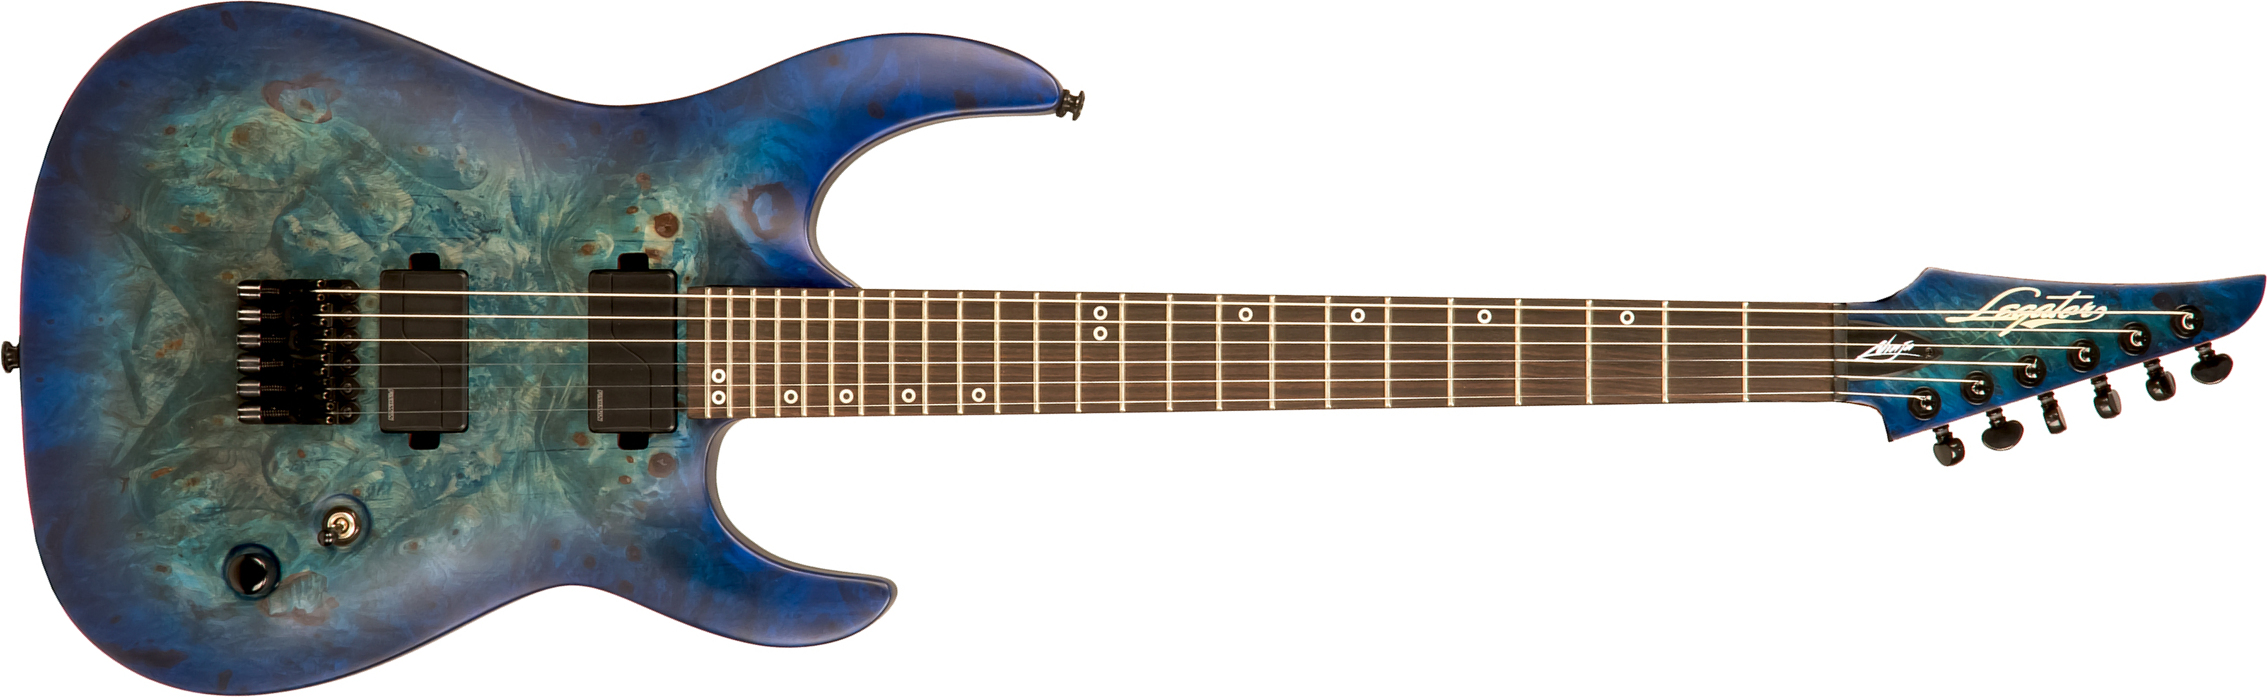 Legator Ninja N6x 2020 Hh Fishman Fluence Ht Eb - Air - Metal electric guitar - Main picture